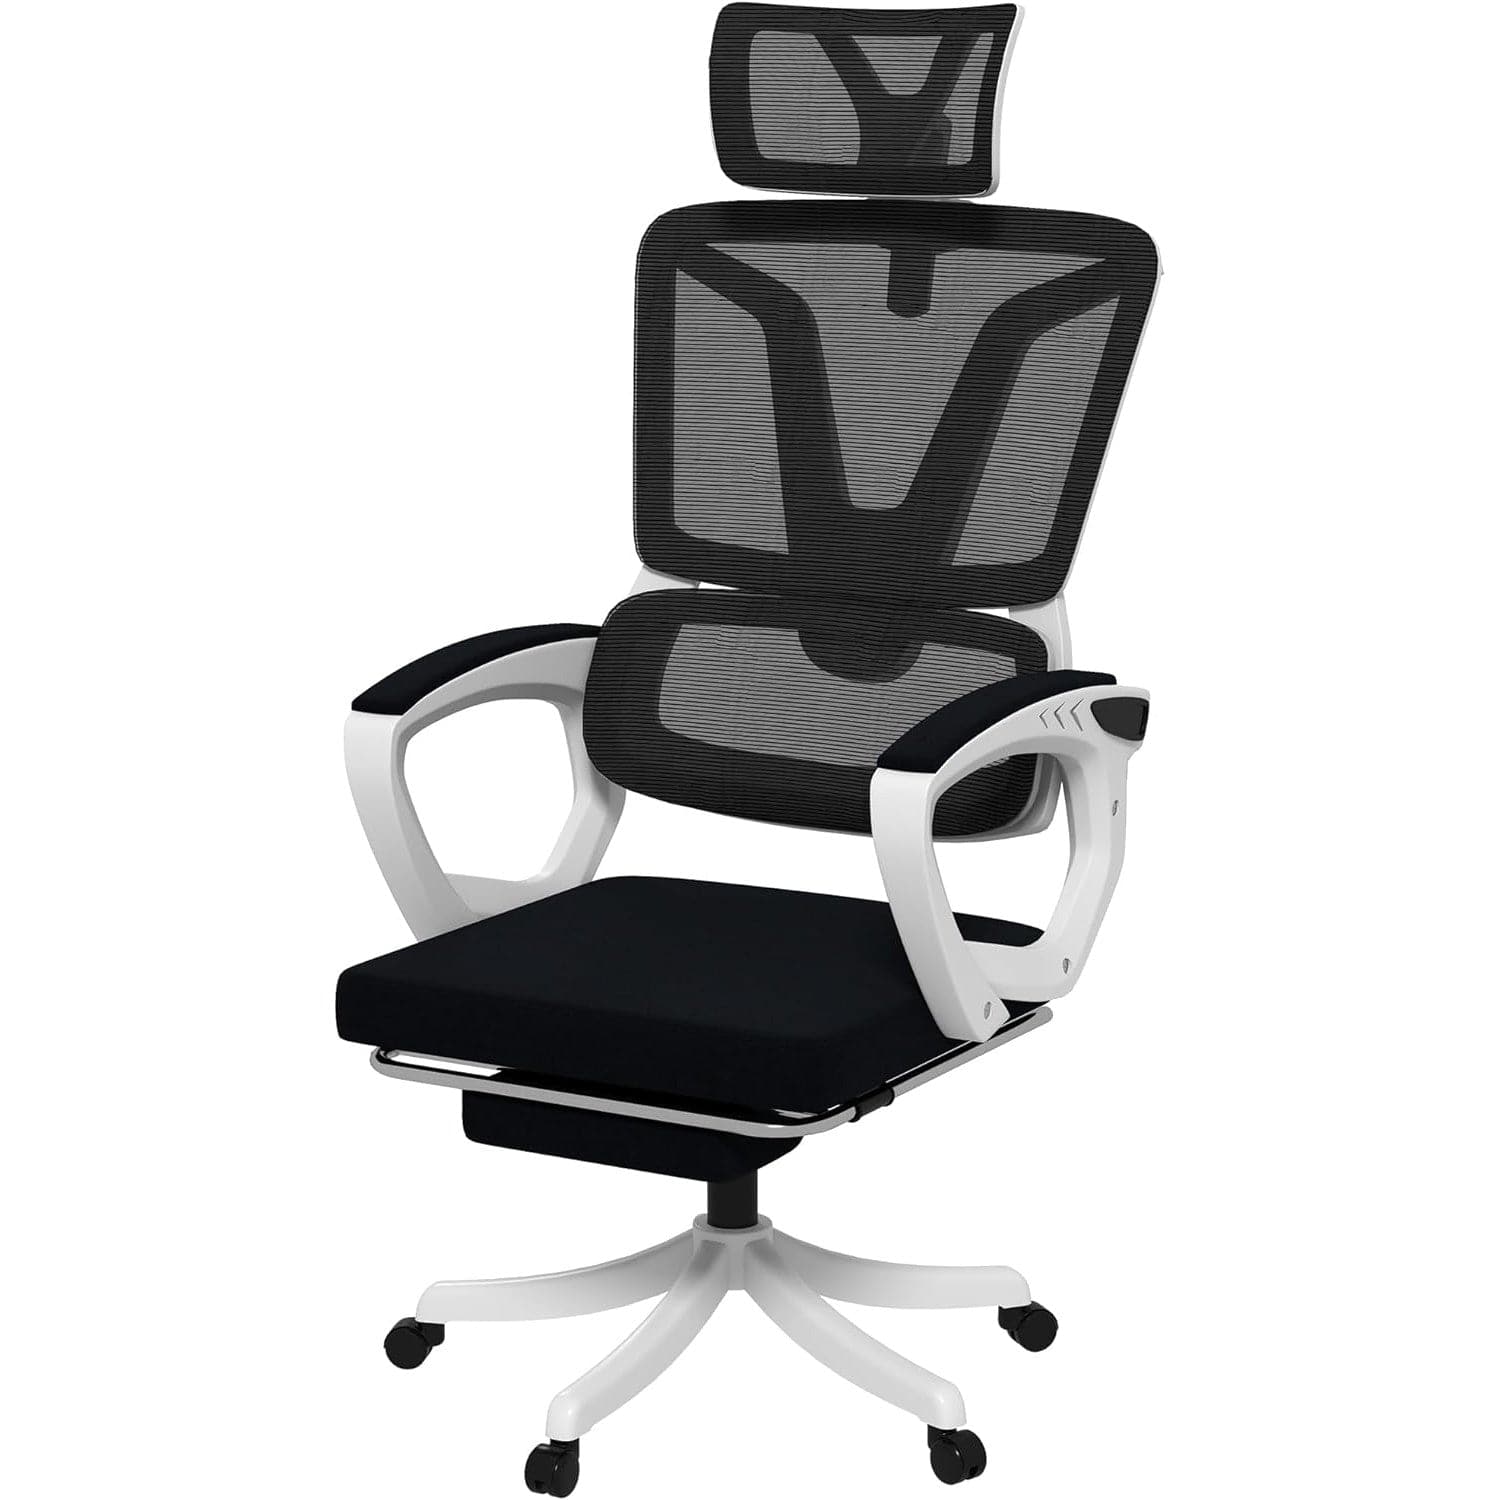 ProperAV Extra Ergonomic Reclining Adjustable Mesh Office Chair with Adjustable Headrest, Lumbar Support & Footrest - Black